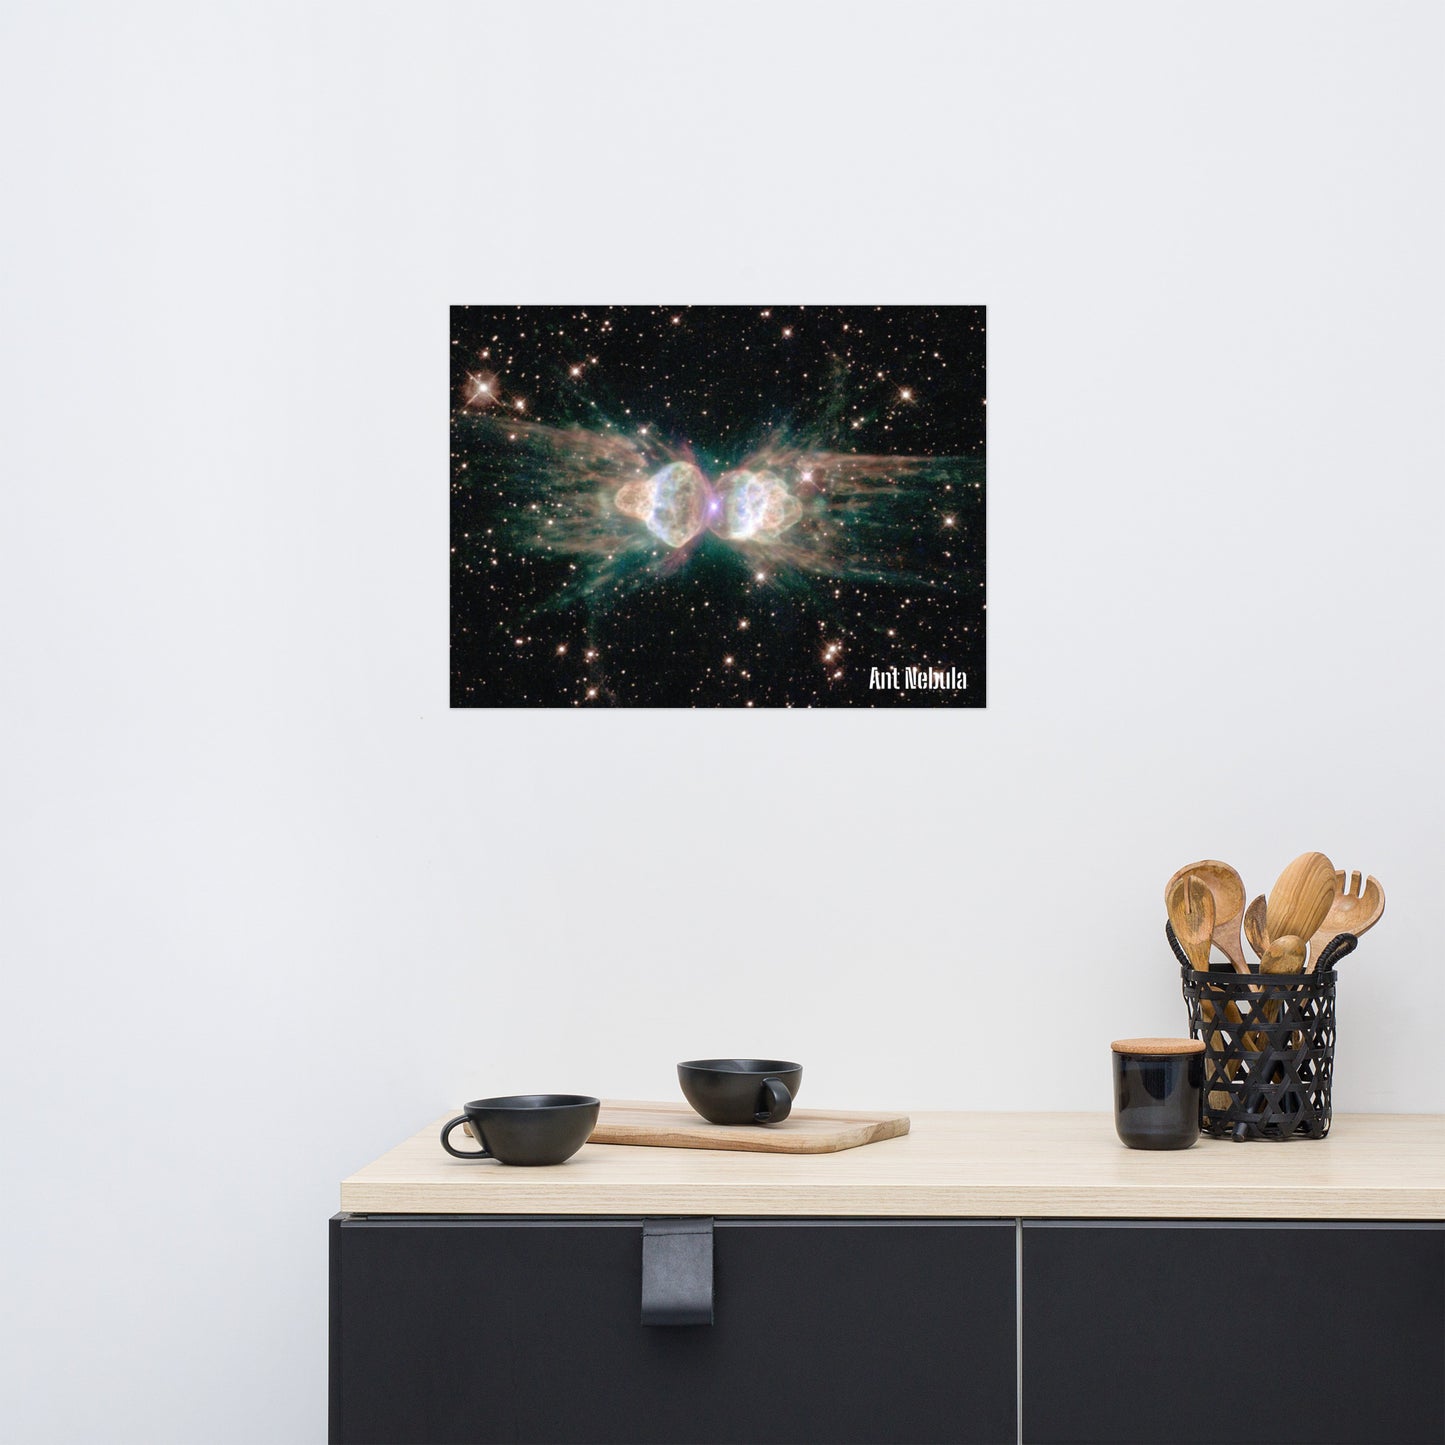 Poster: Ant Nebula